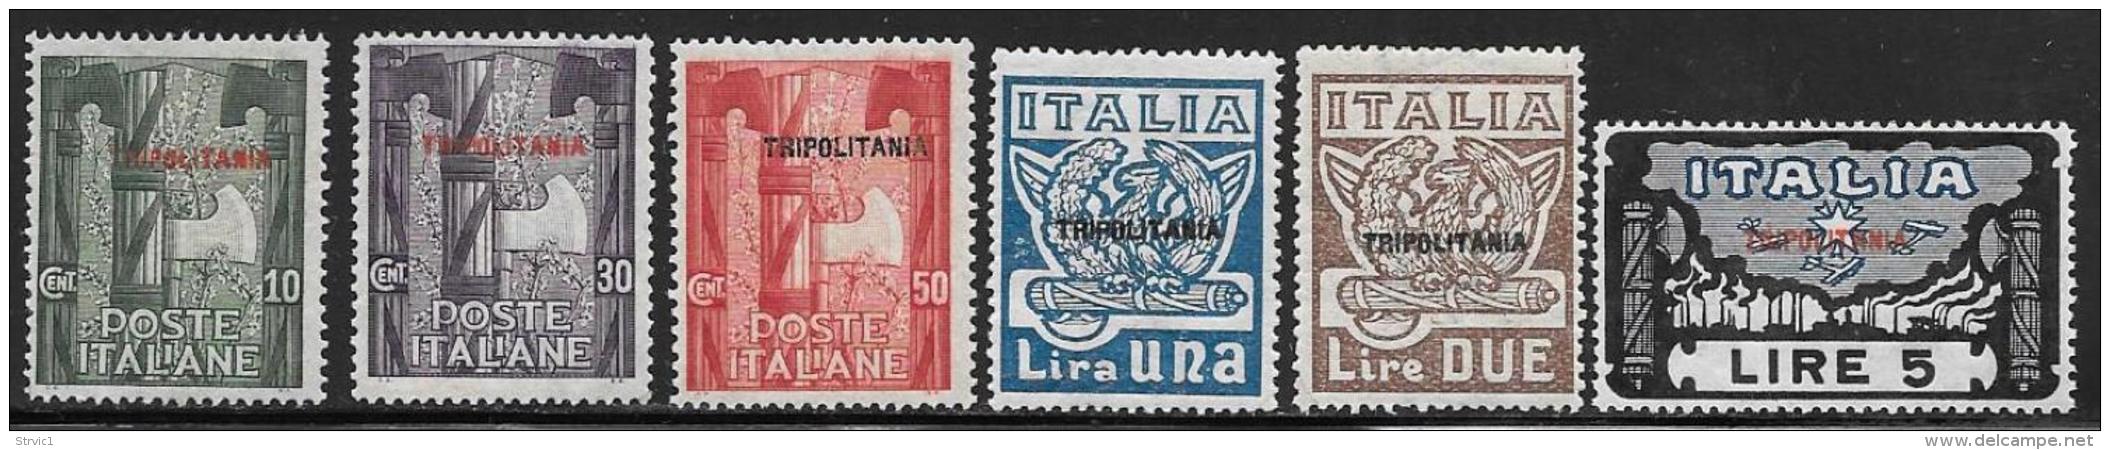 Tripolitania, Scott # 5-10 Mint Hinged Italy Fascisti Issue Overprinted, 1923 - Tripolitania